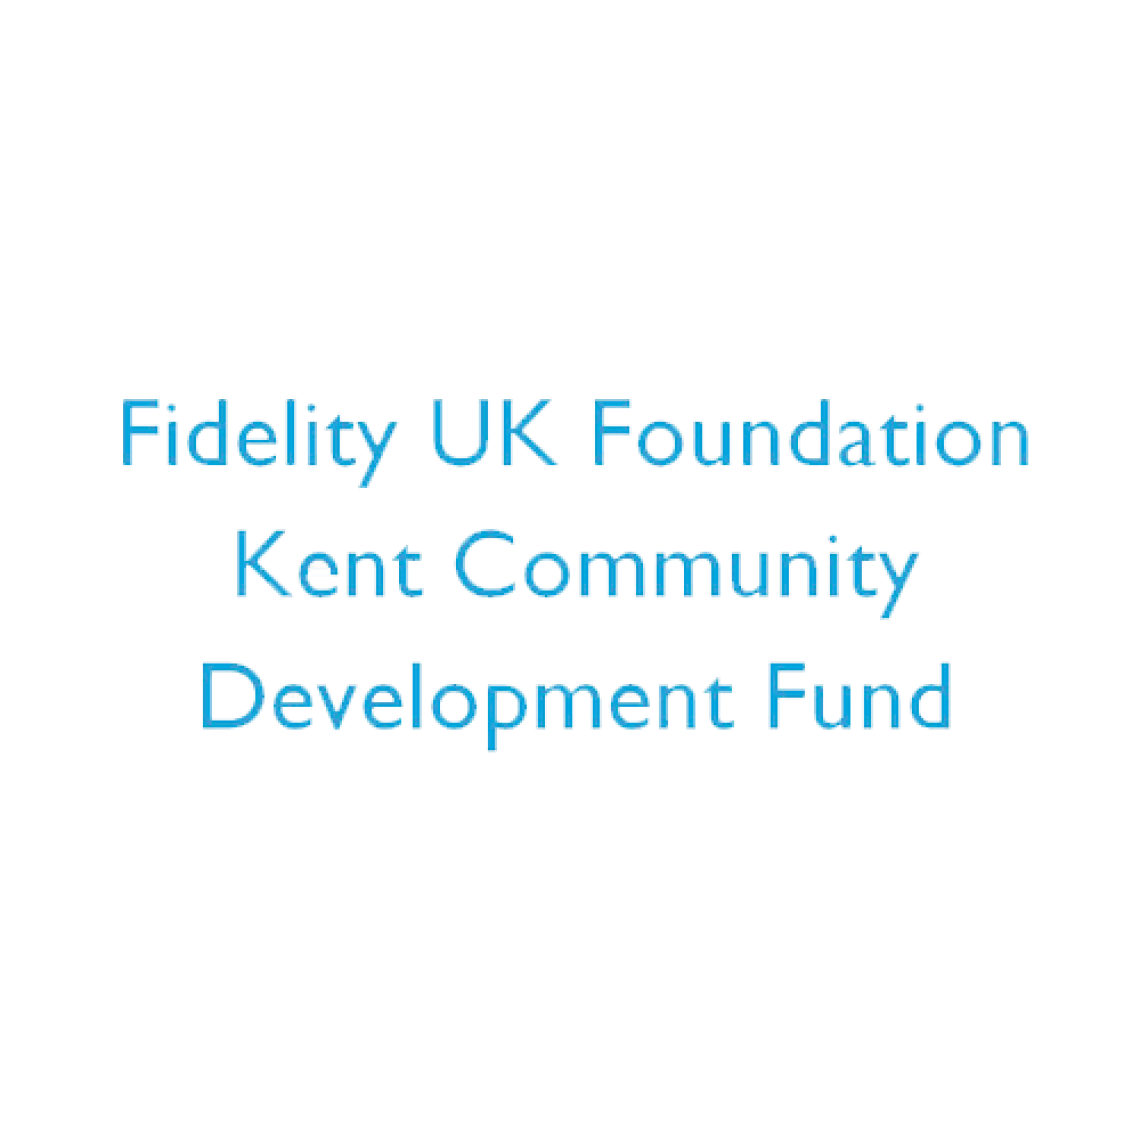 Fidelity UK Foundation#Kent Community Development Fund